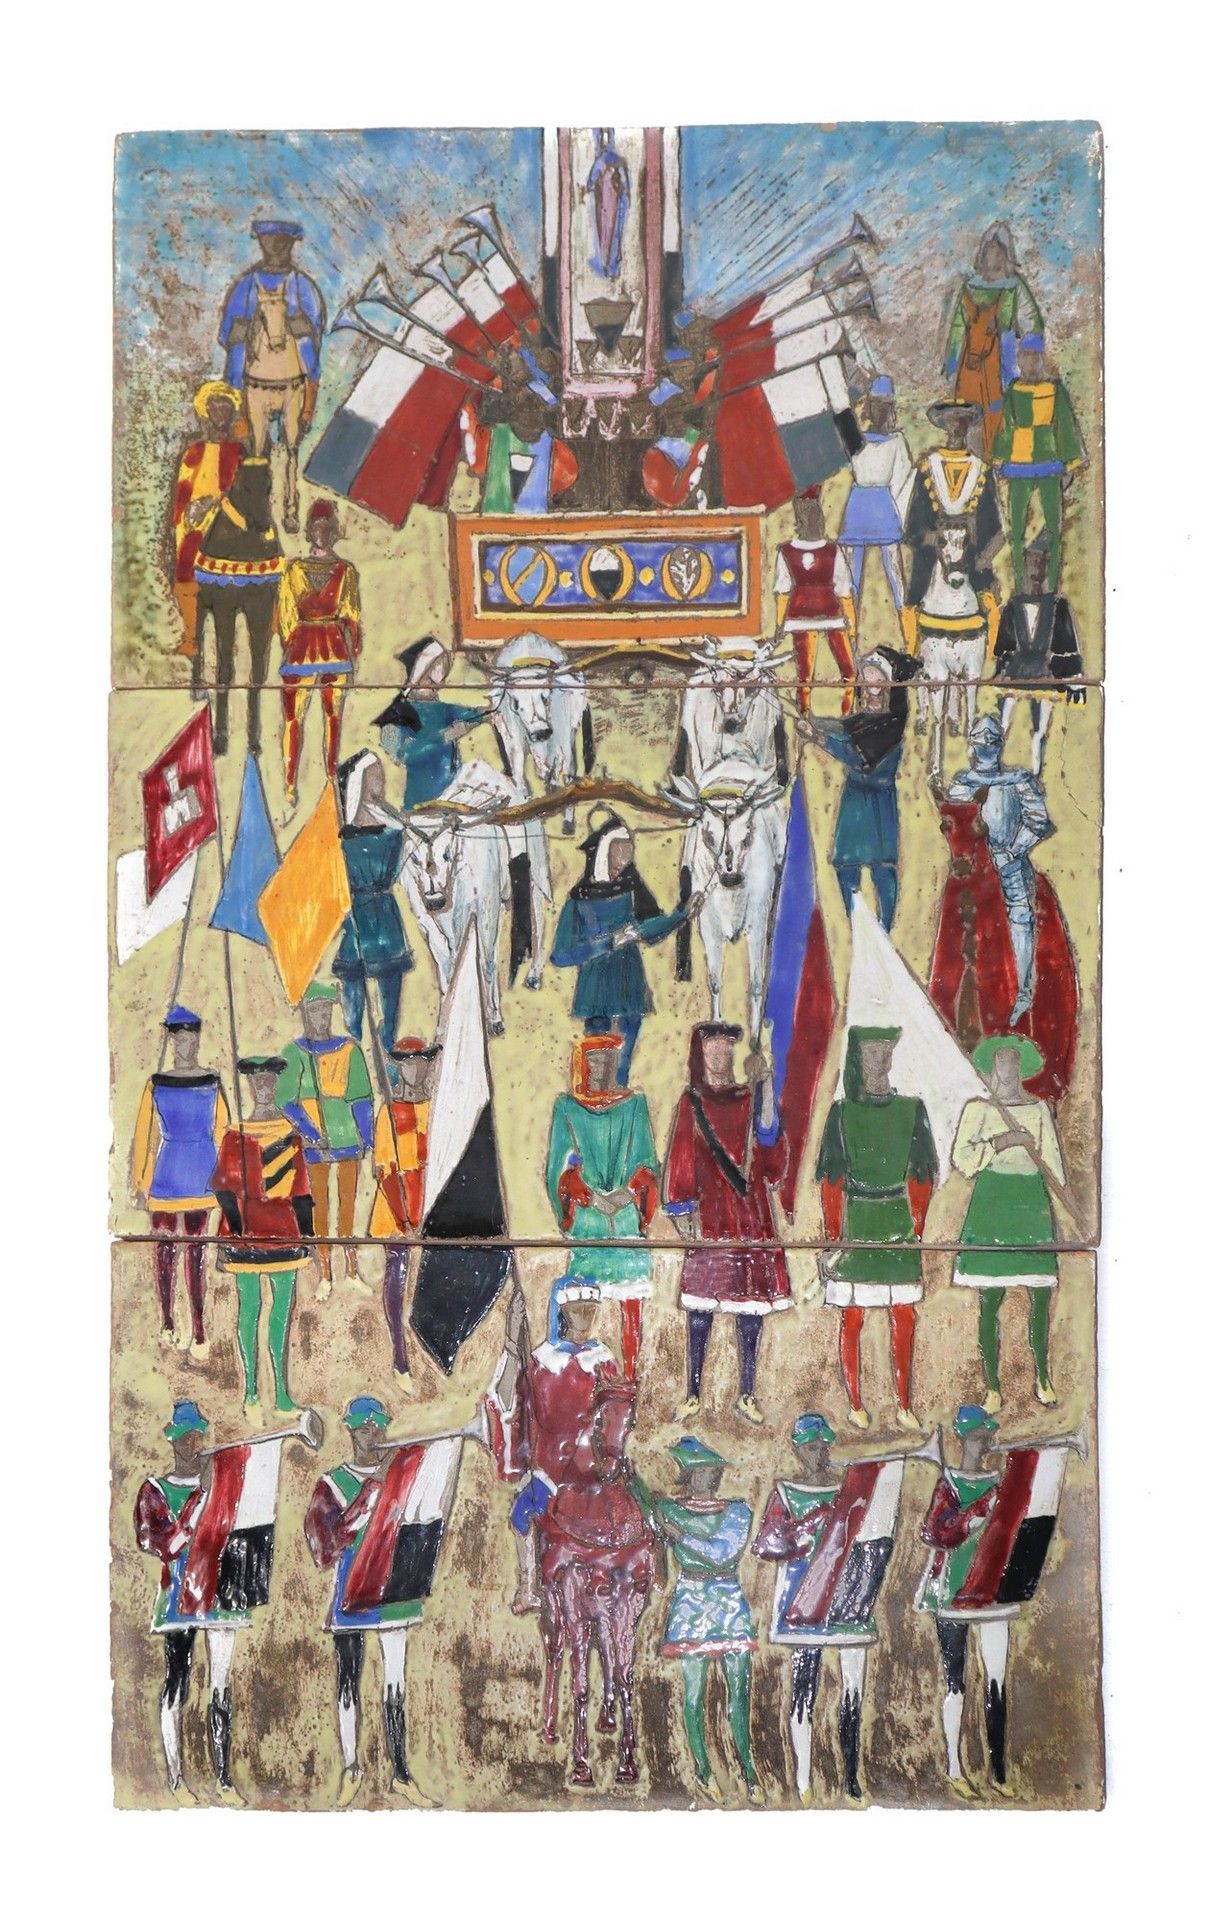 Null 托斯卡纳赤土陶器，20世纪中叶 74厘米 x 43厘米 描绘了锡耶纳的帕里奥和穿着历史服装的队伍，在坎波广场上用牛拉着的带有圣母像的车。由三件作品组成